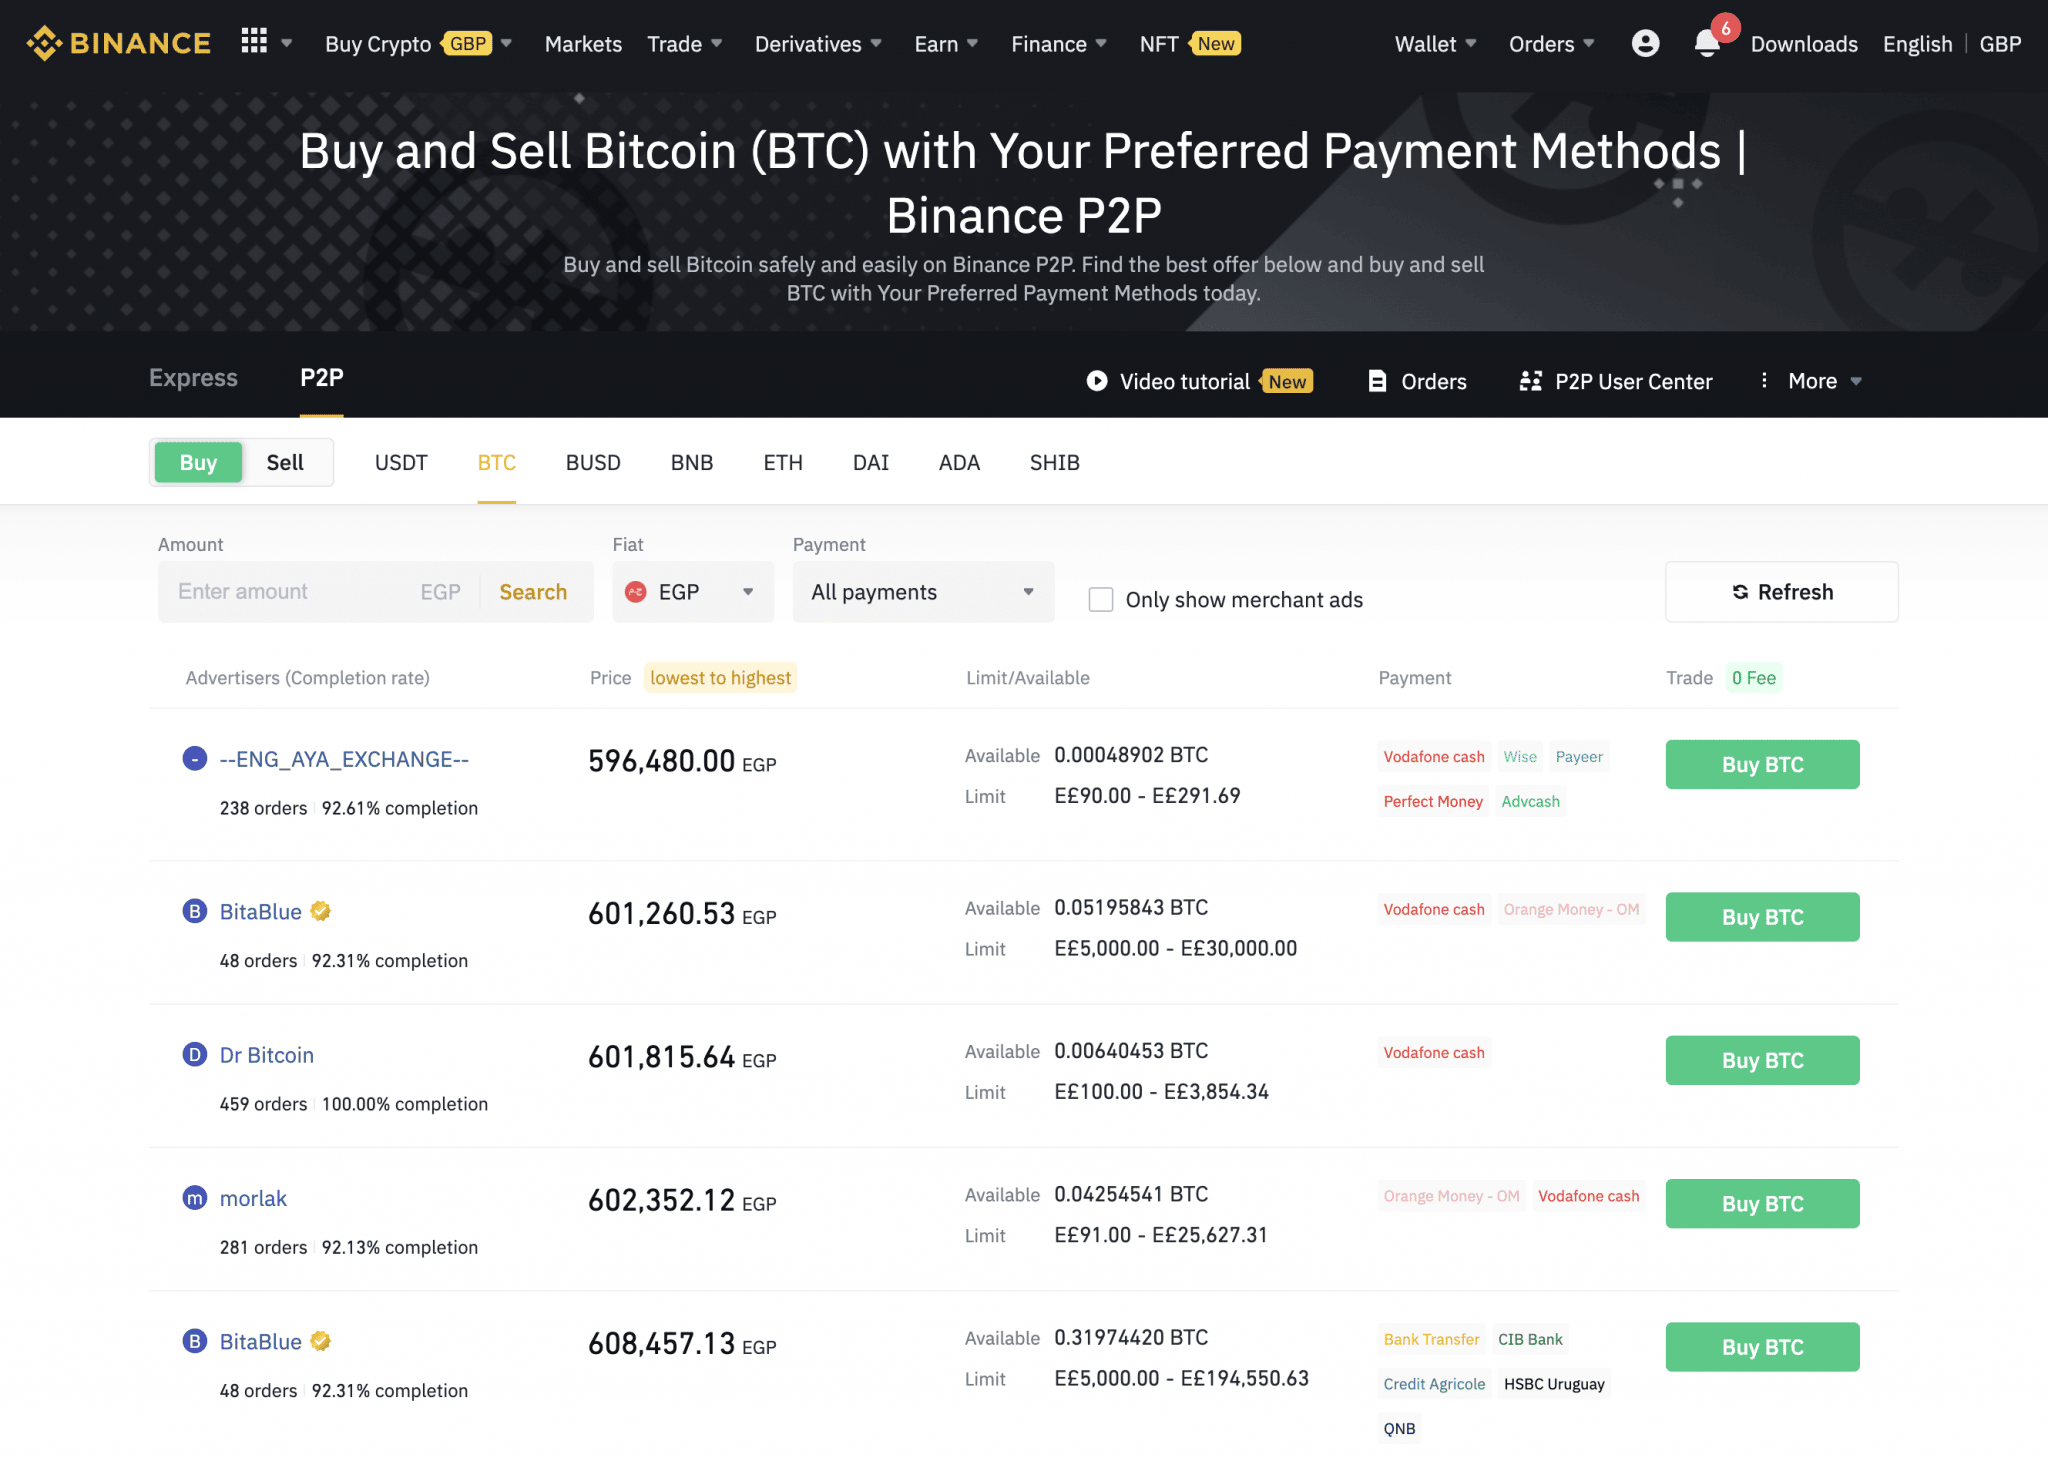 buy bitcoin in egypt